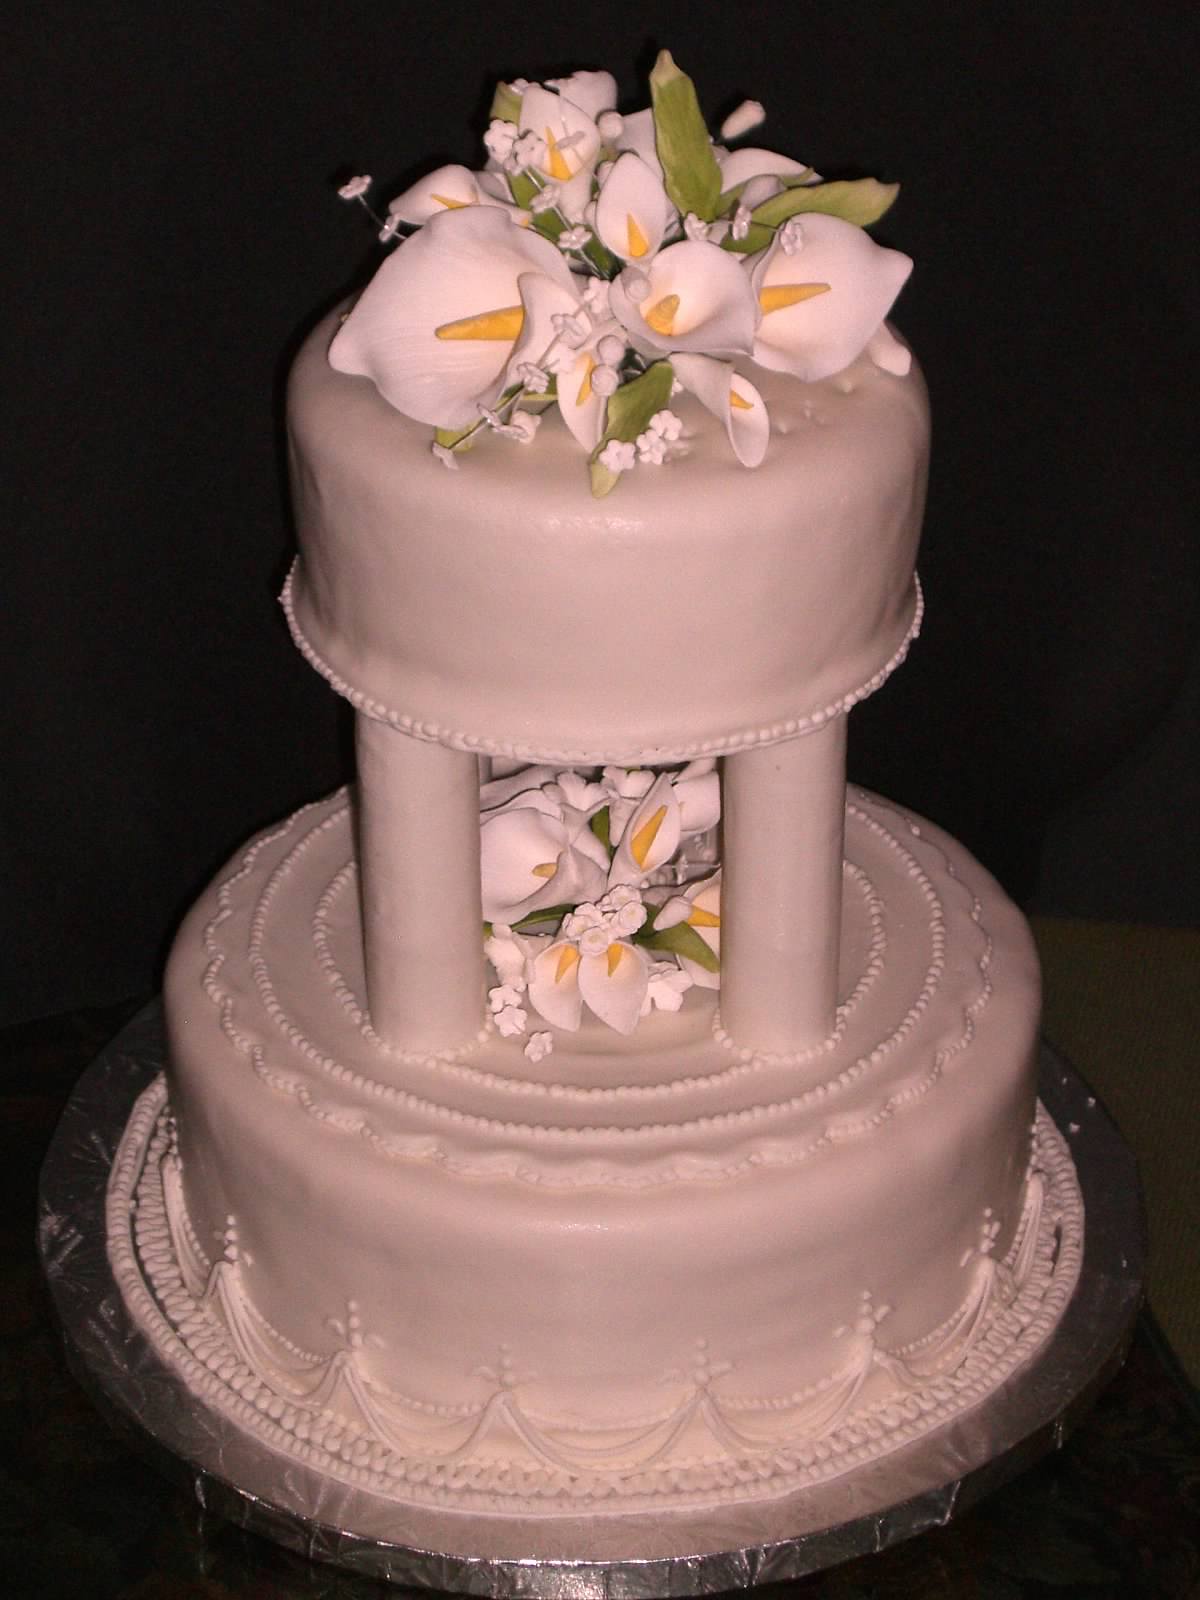 2 Tier Fondant Wedding Cake